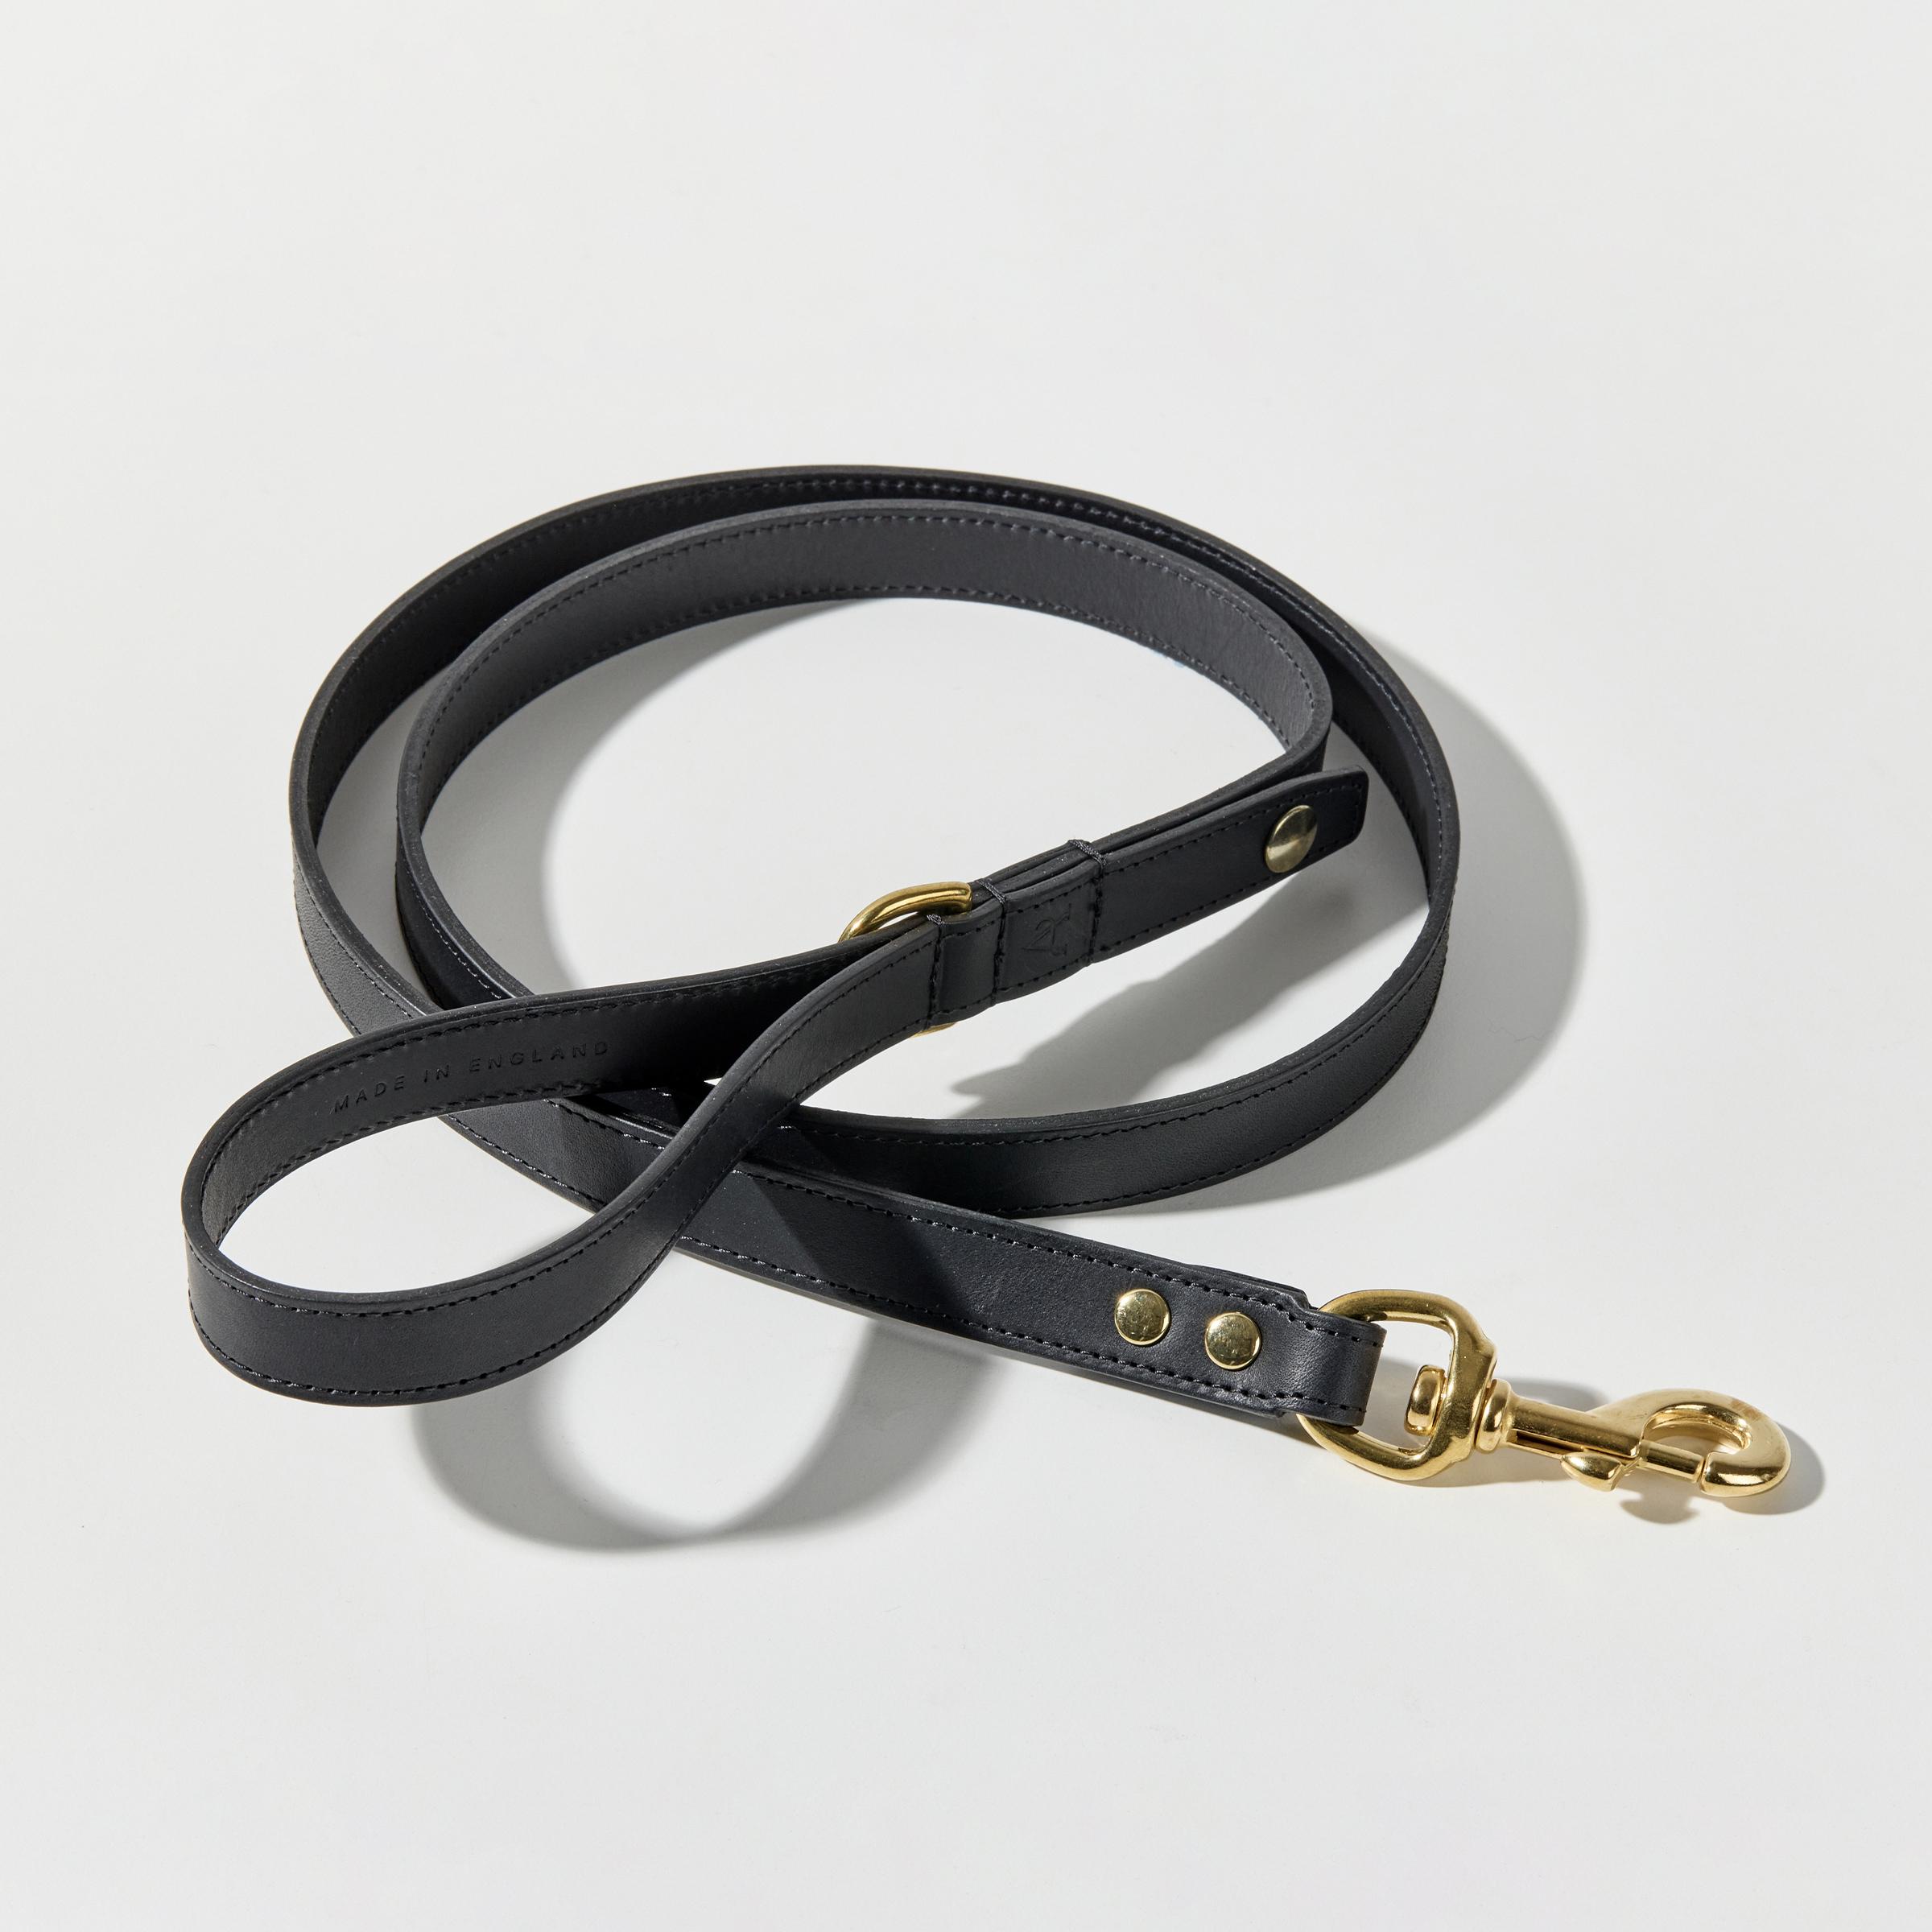 Leather Dog Leash – Black